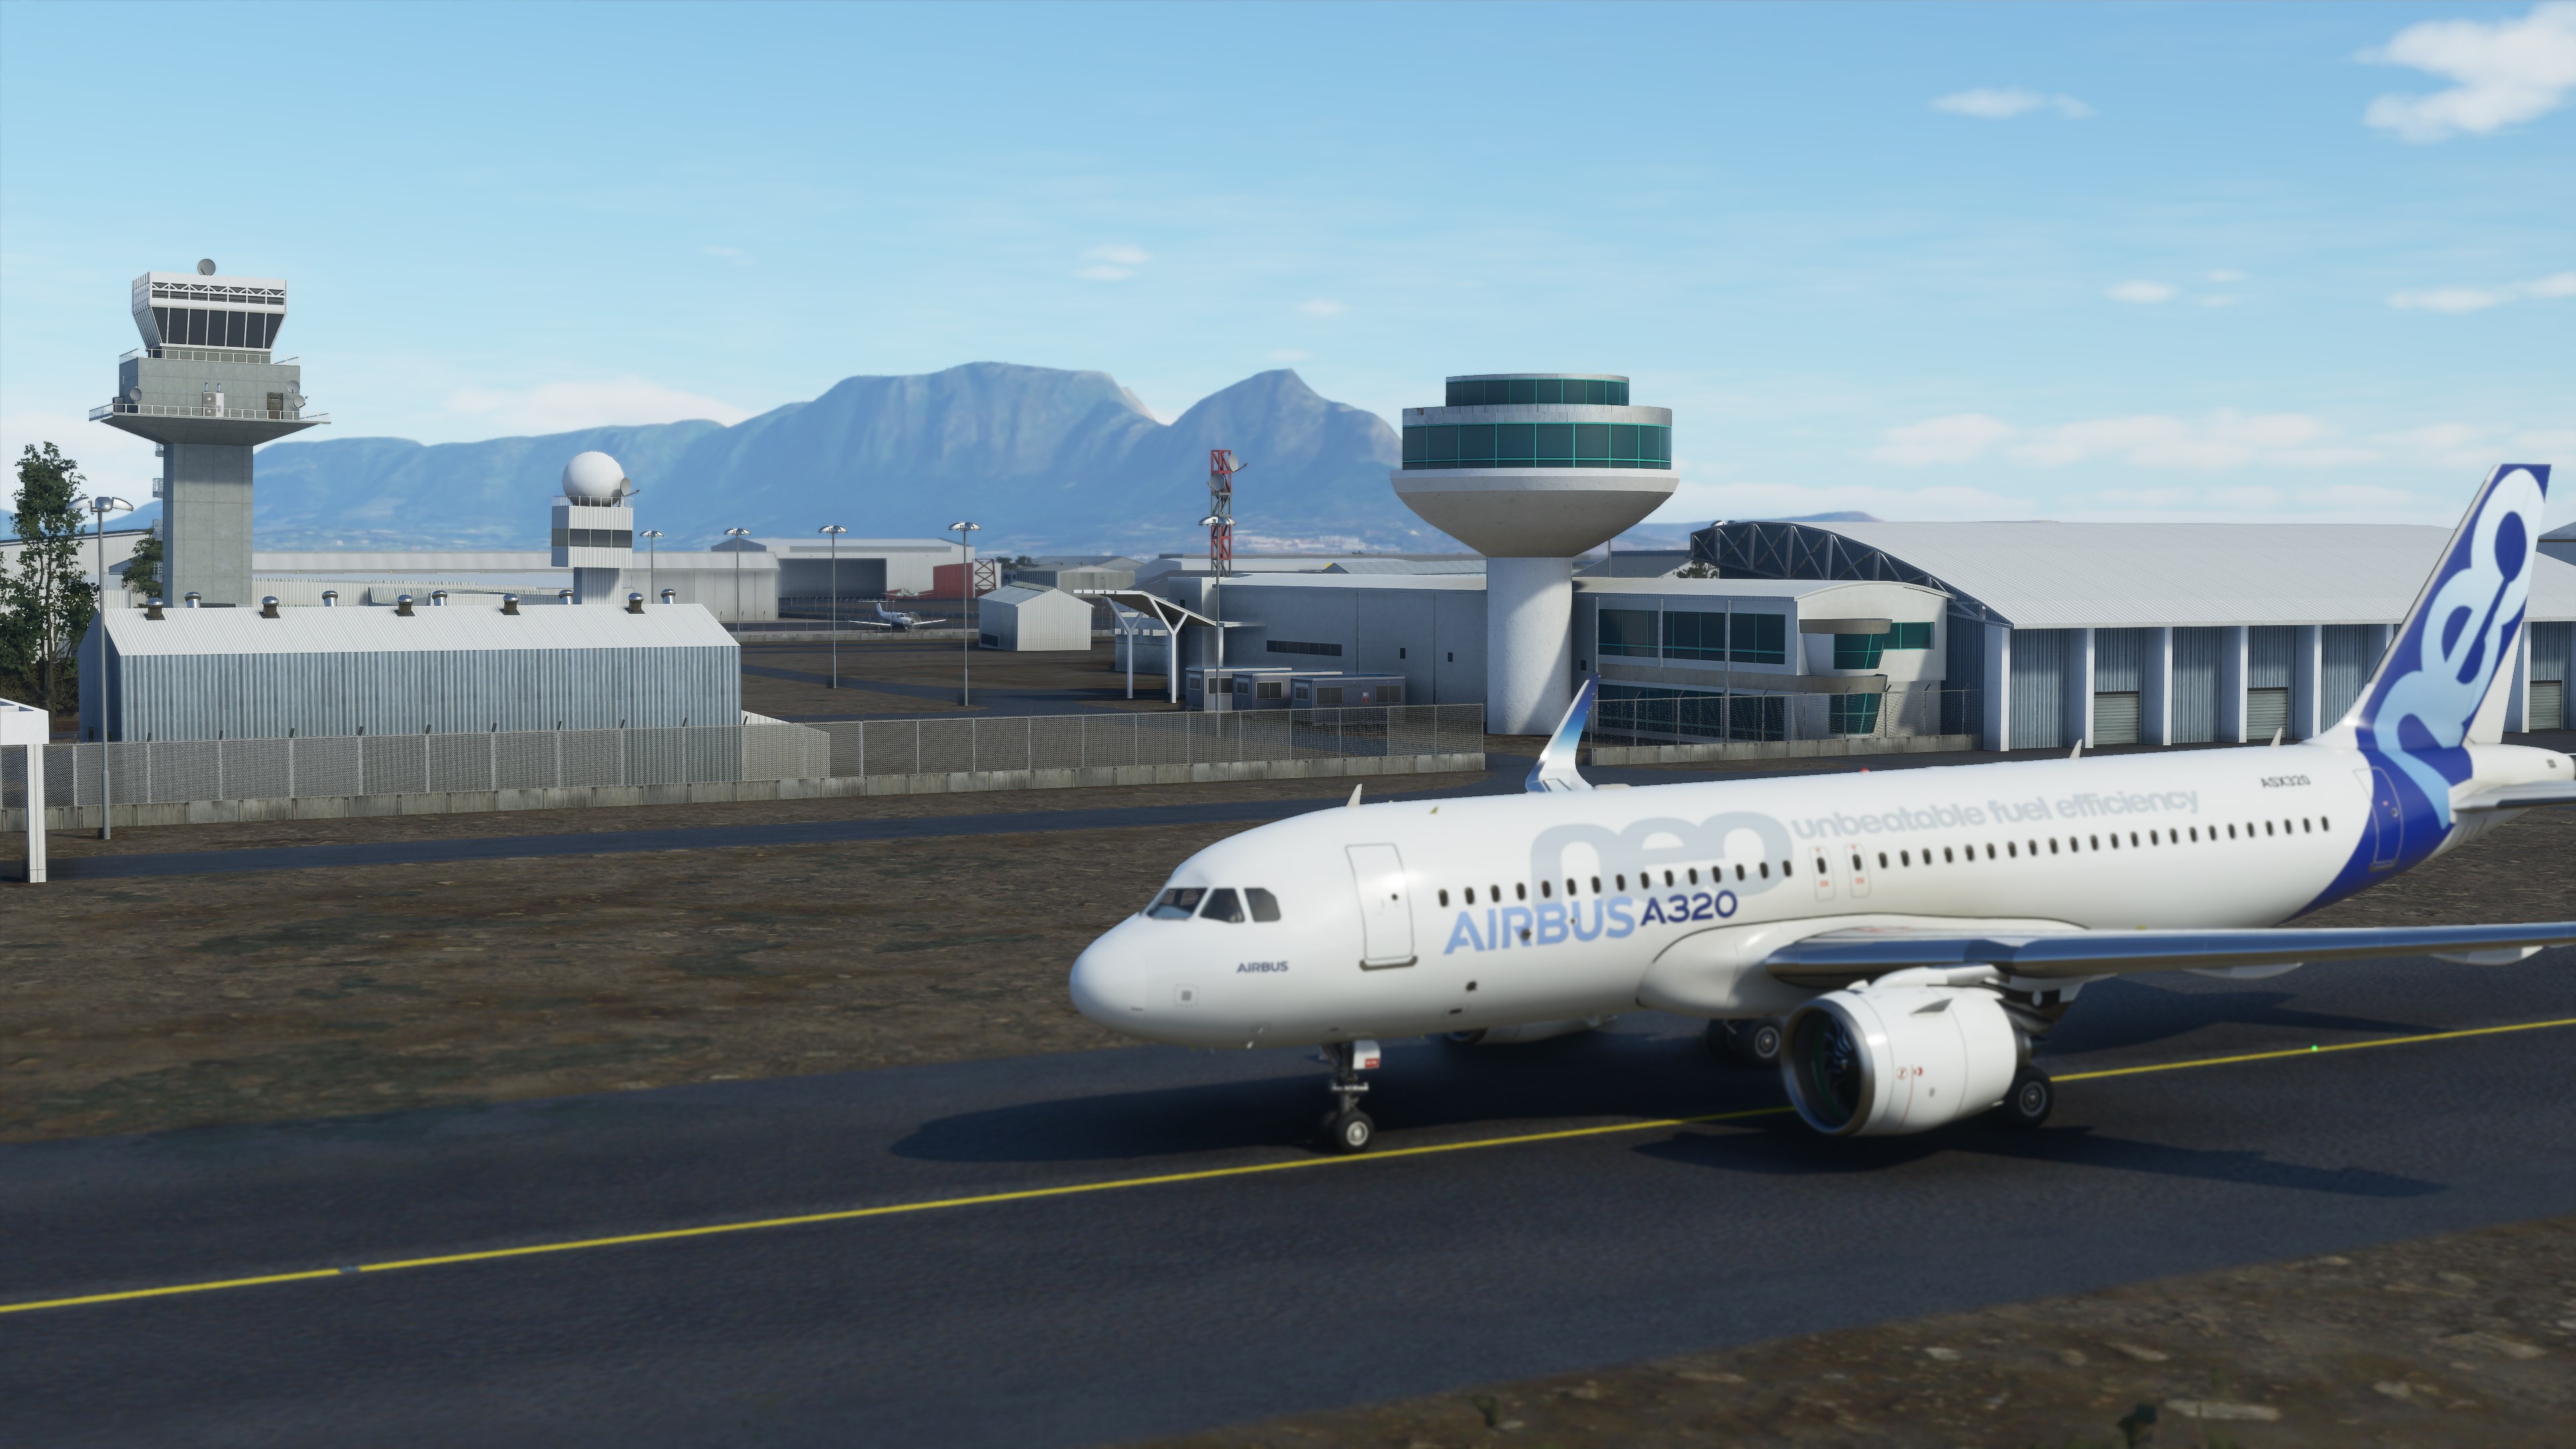 Mfs 2020 купить. Microsoft Flight Simulator (2020). Microsoft Flight Simulator 2020 Deluxe Edition. Microsoft Flight Simulator Premium Deluxe. Майкрософт Флайт симулятор 2020.